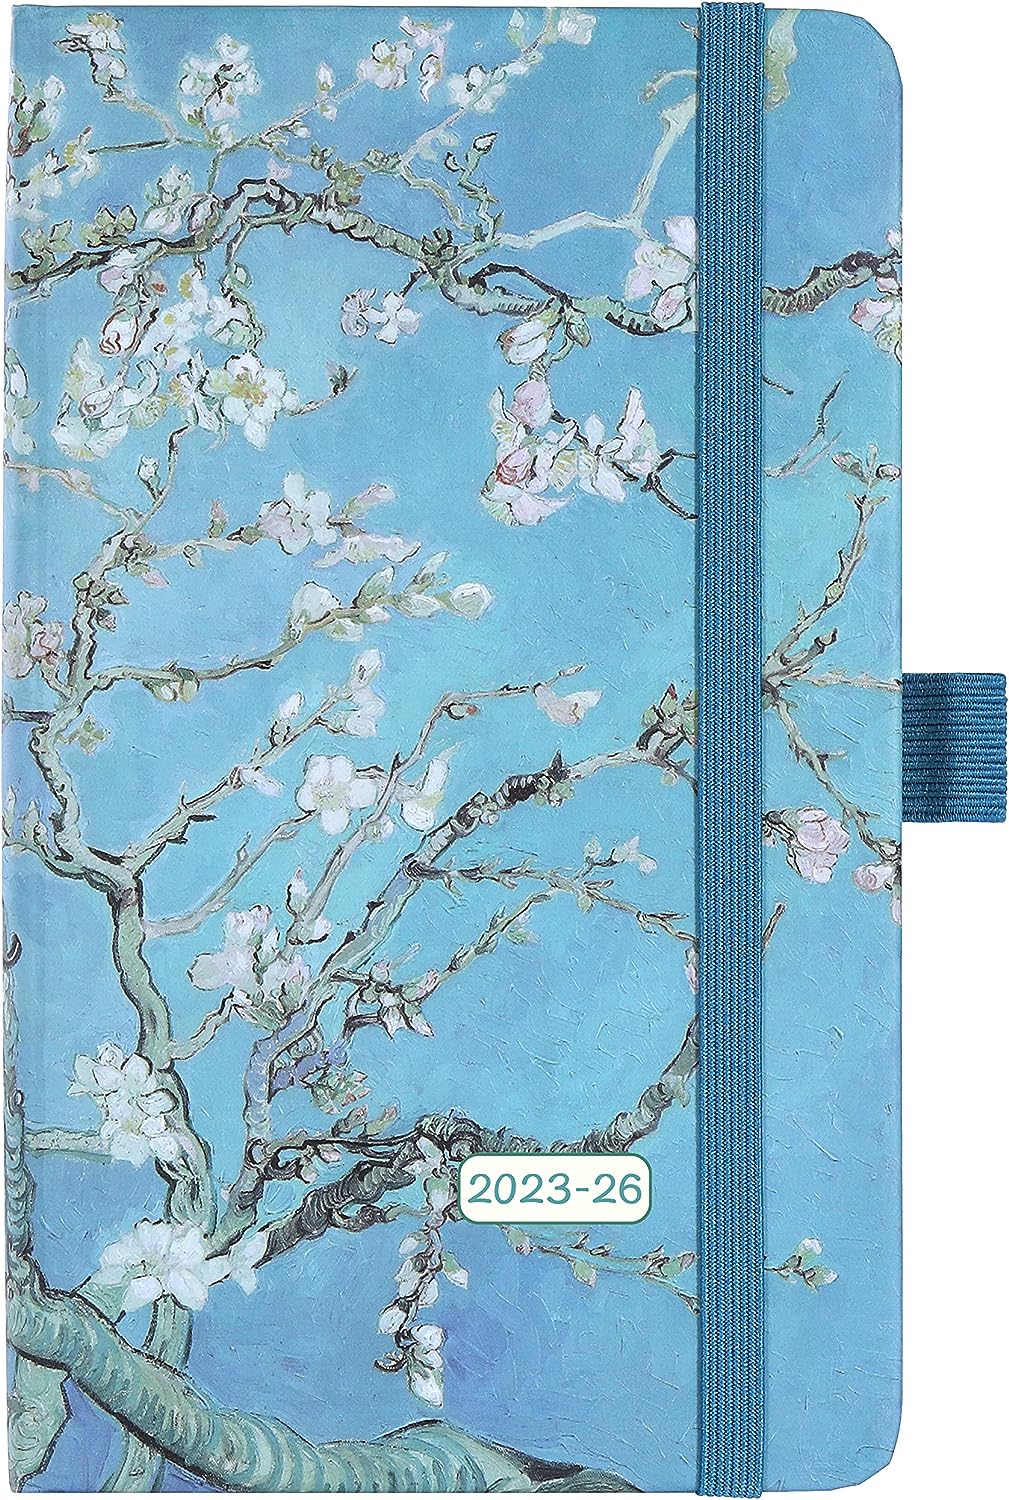 2023-2026 Monthly Pocket Planner/Calendar - 3 Year [...]